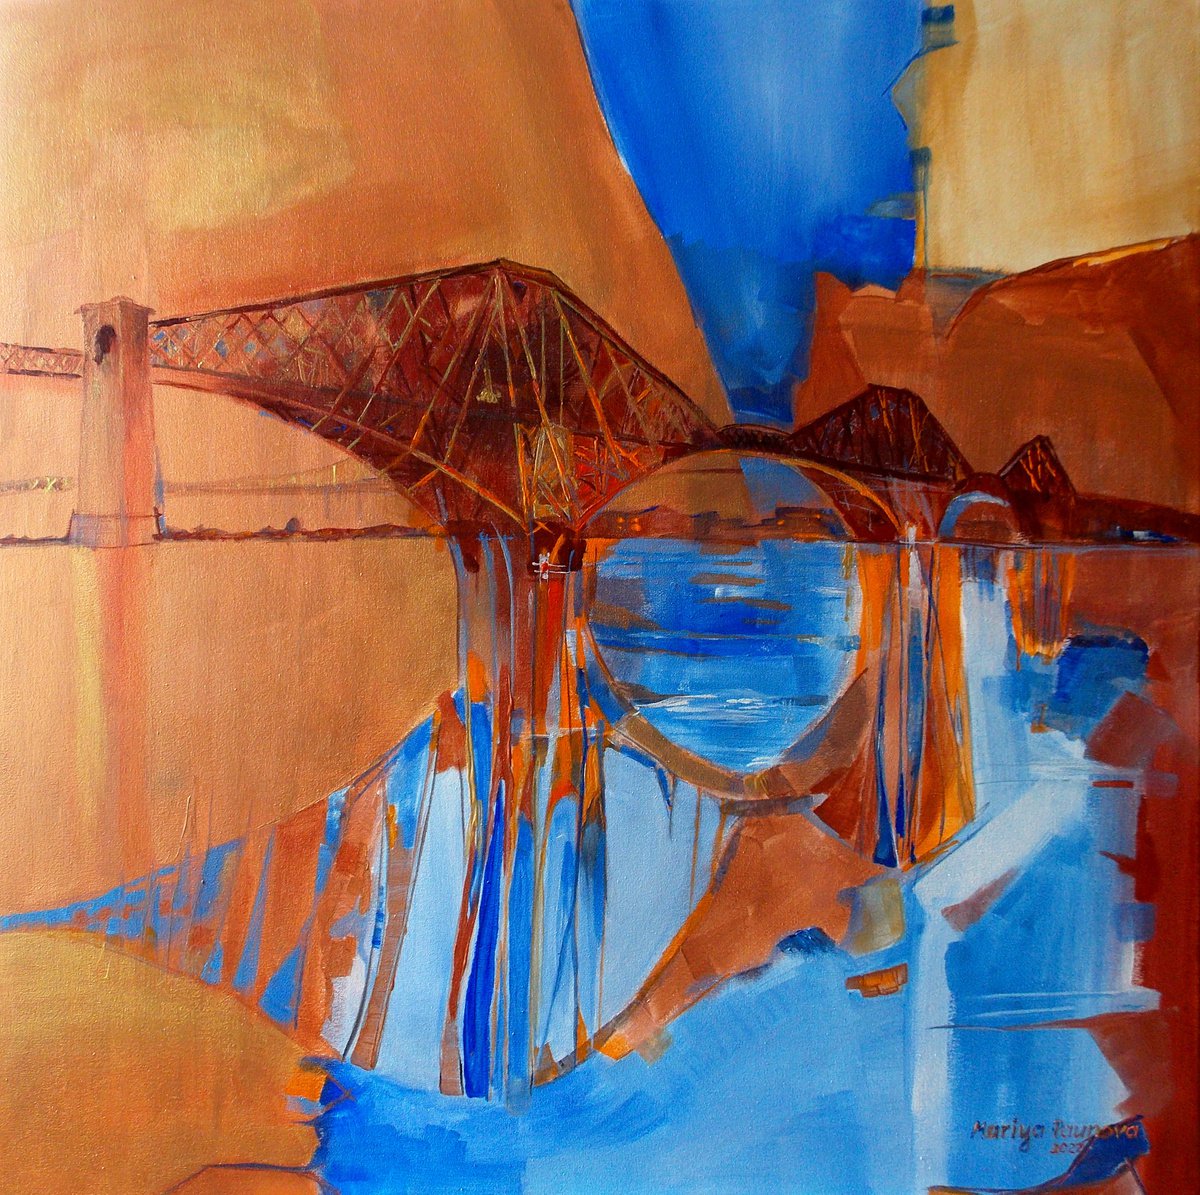 The Forth Bridge by Maria Paunova